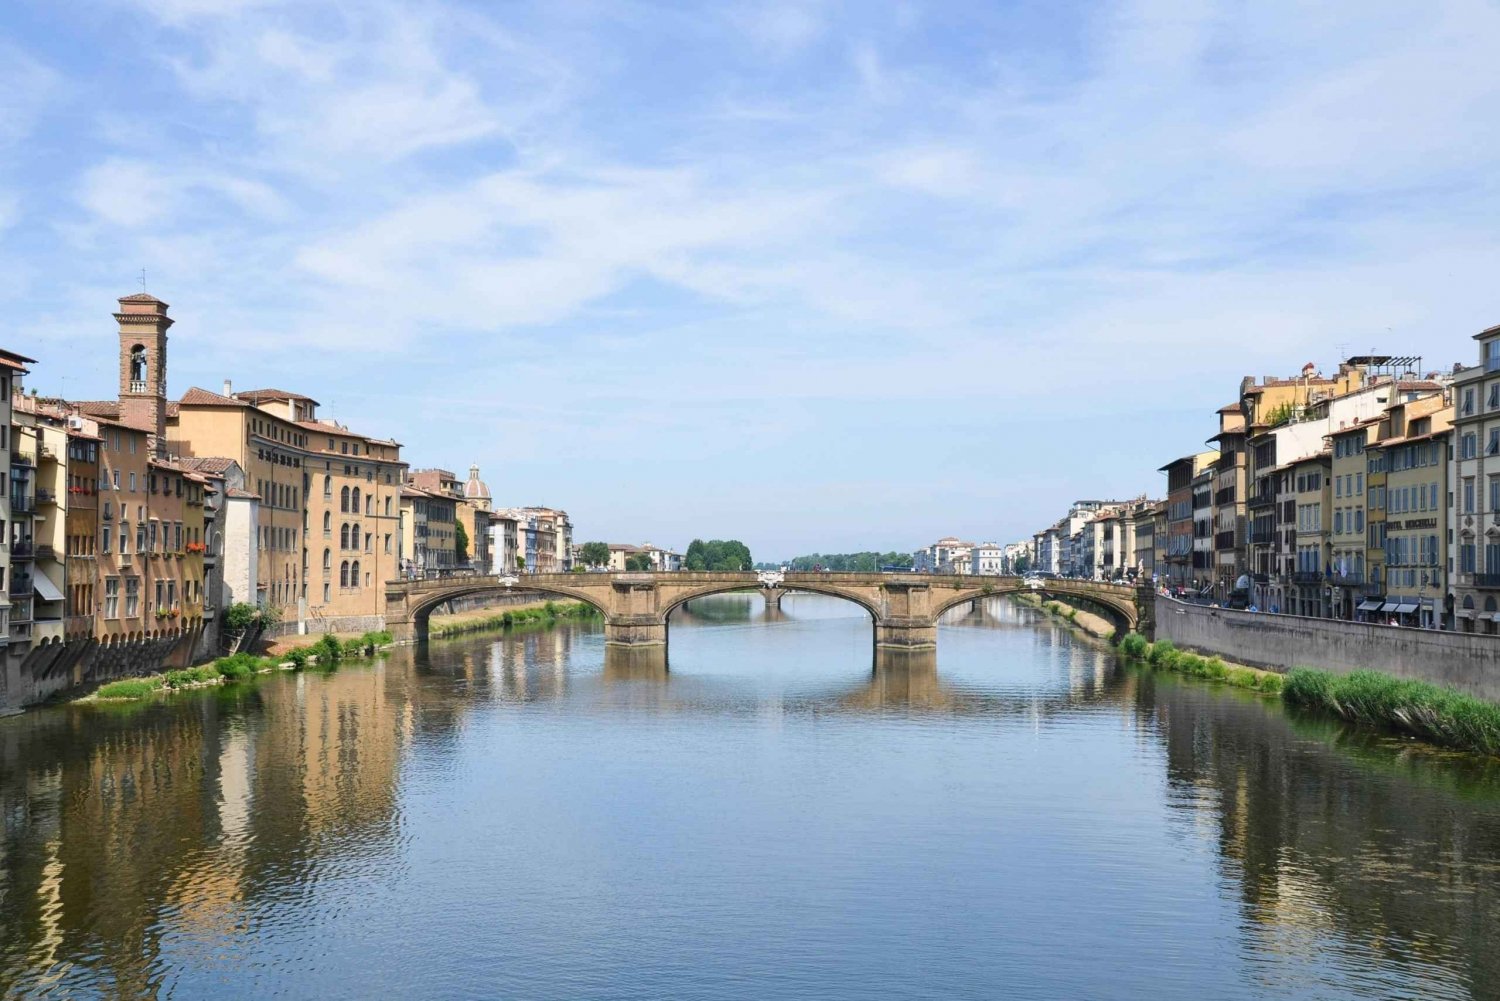 Firenze katedral og Arno River Cruise: A Journey Through Ar